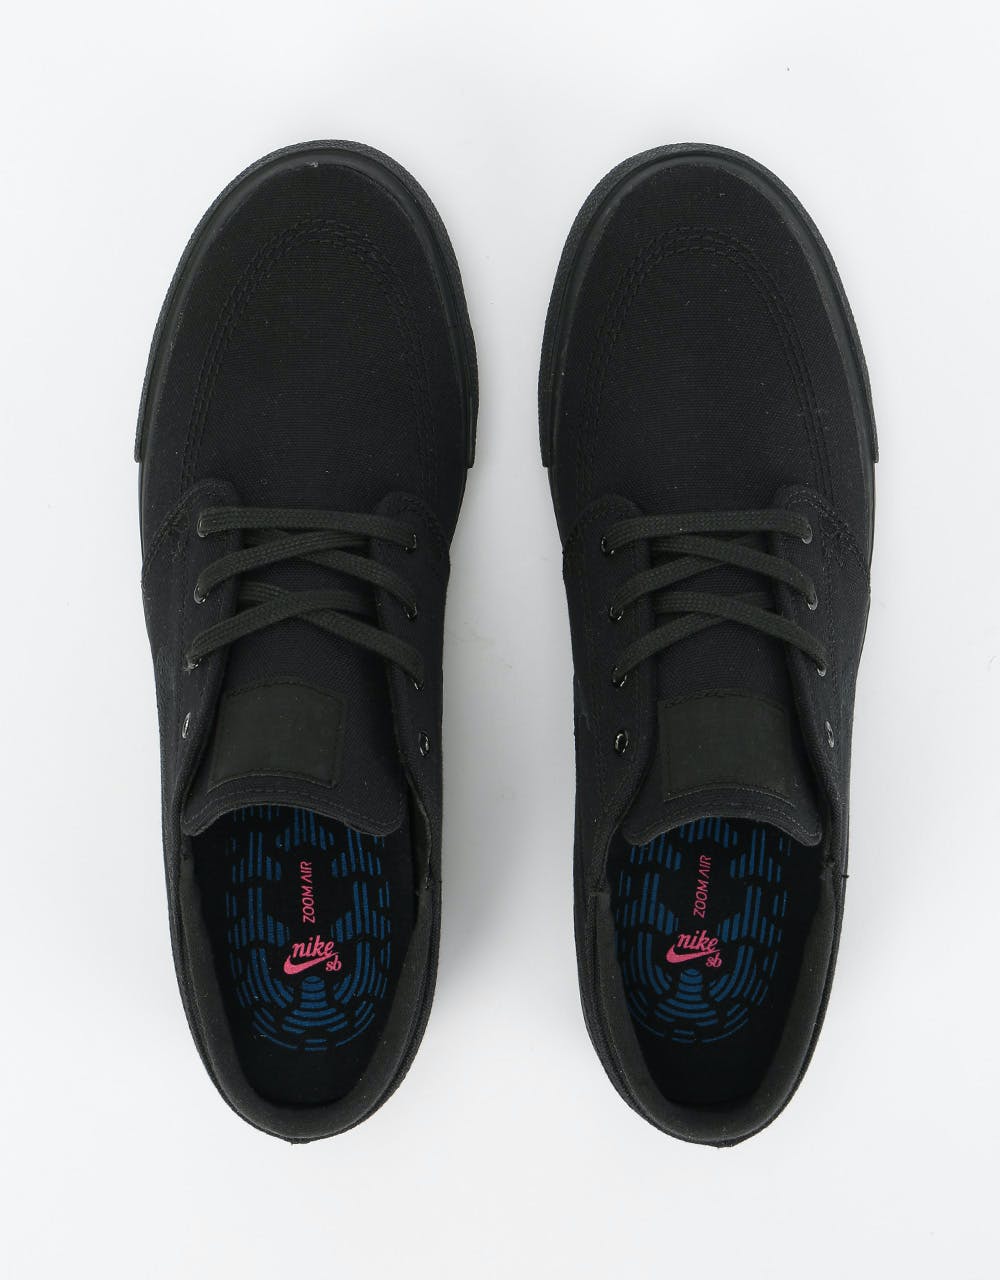 Nike SB Zoom Stefan Janoski Canvas RM Skate Shoes - Black/Black-Black-